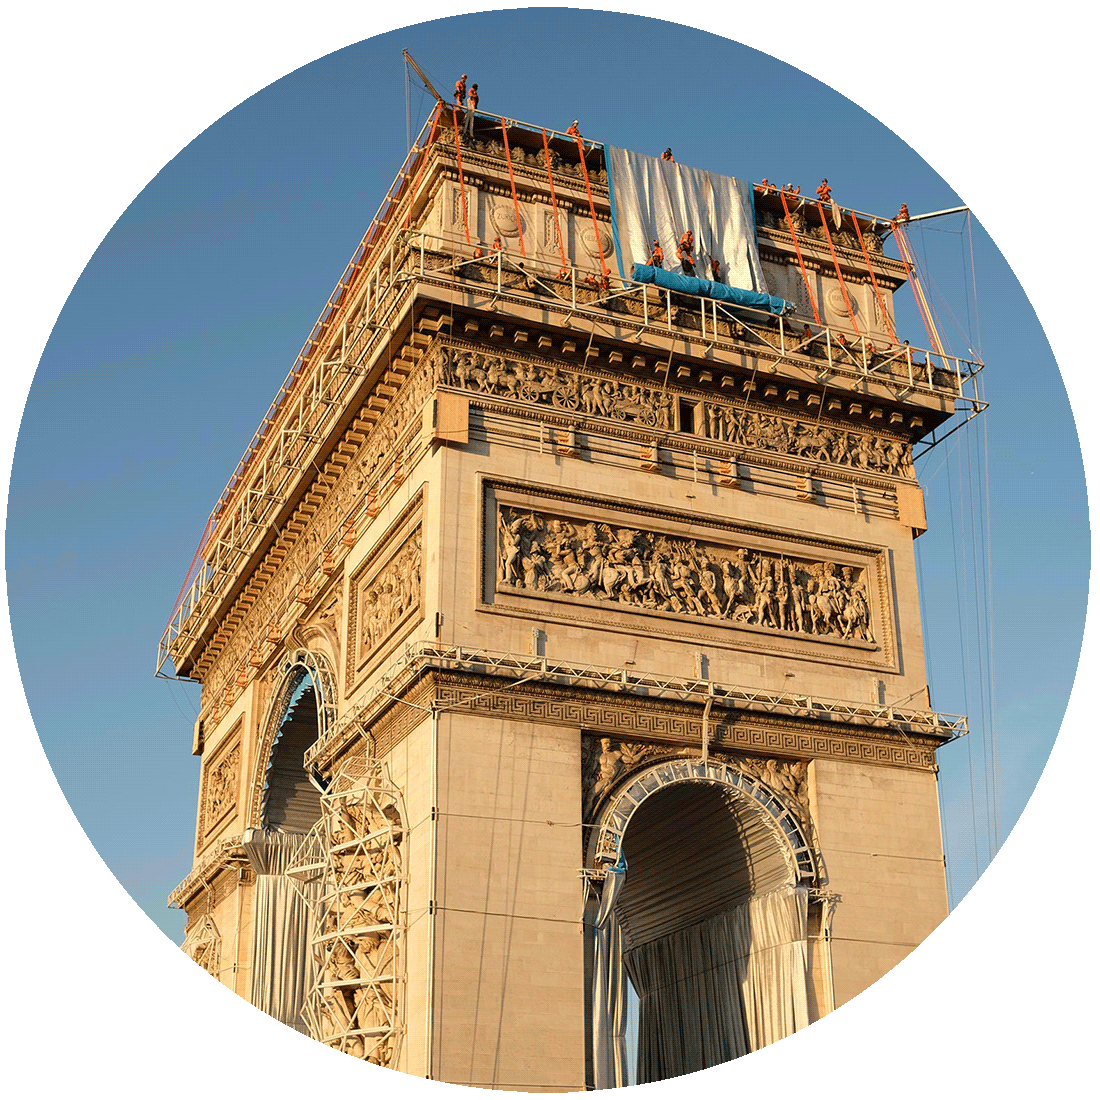 LOUIS VUITTON OPENS A NEW FLAGSHIP STORE IN PARIS, NEAR PLACE VENDOME - Arc  Street Journal